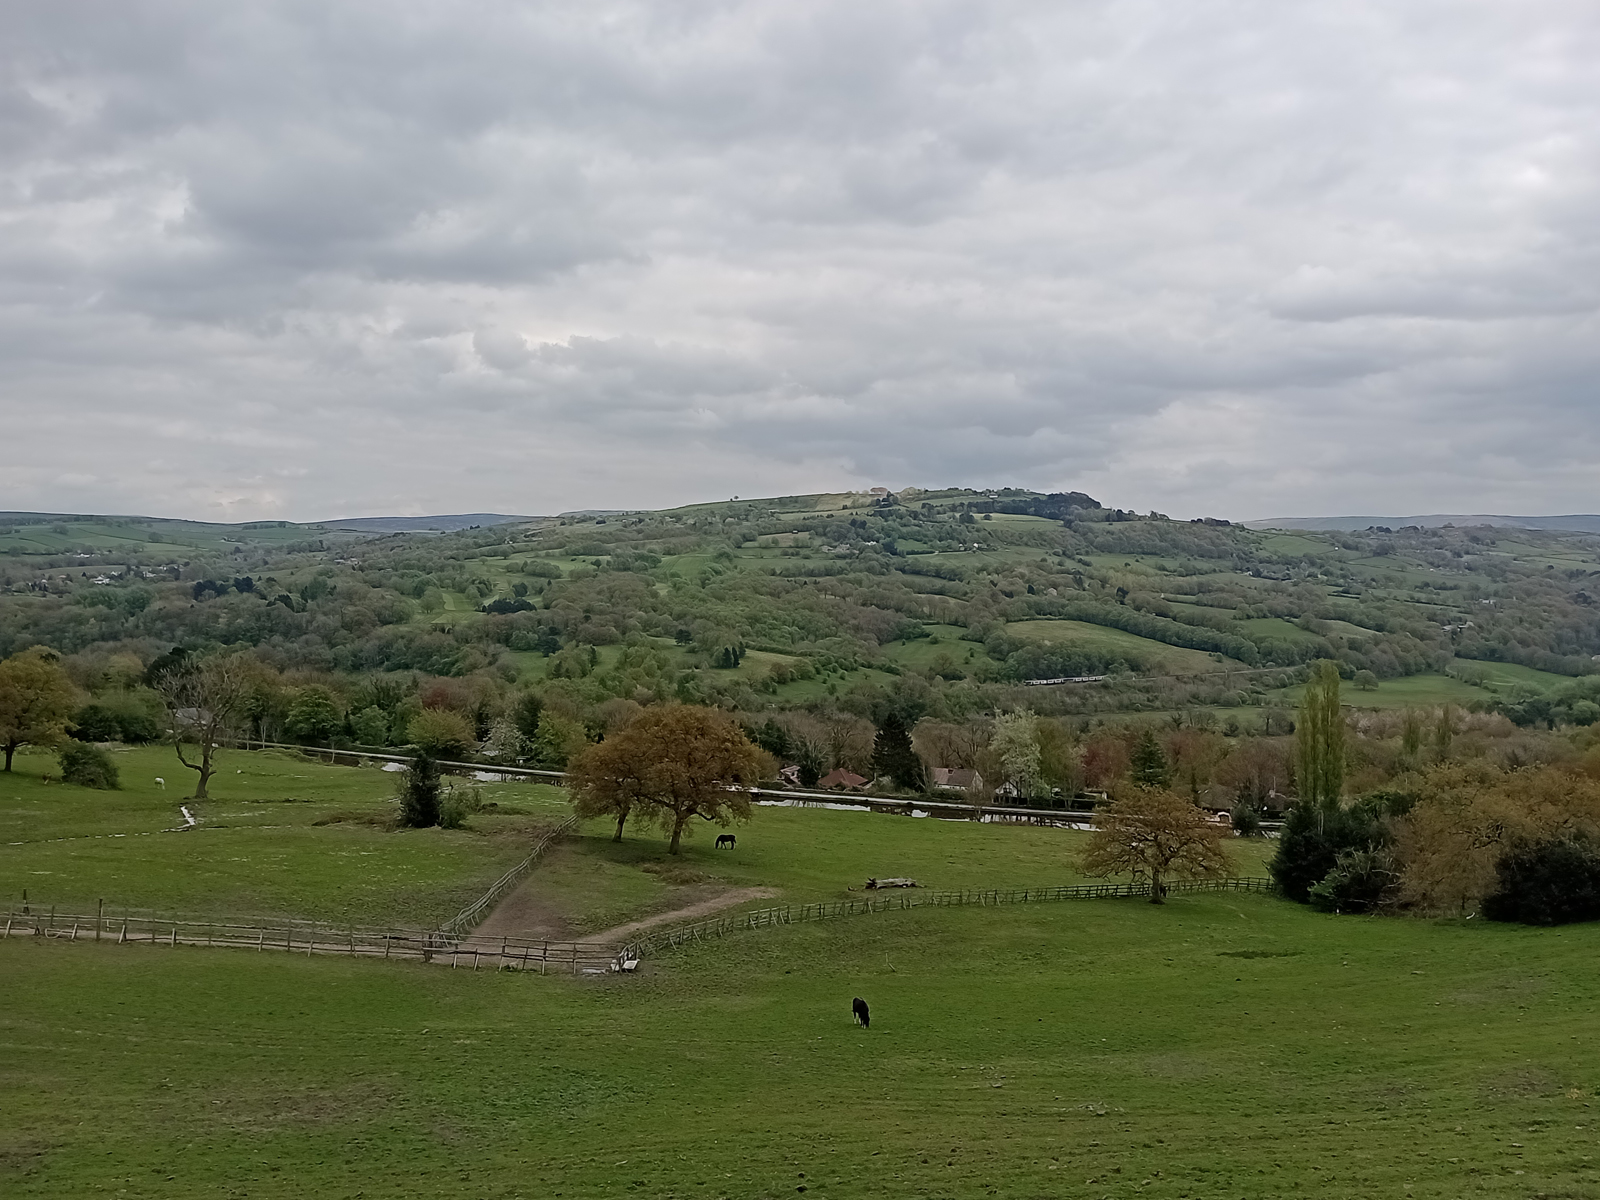 Moto G22 camera sample showing a hilly landscape